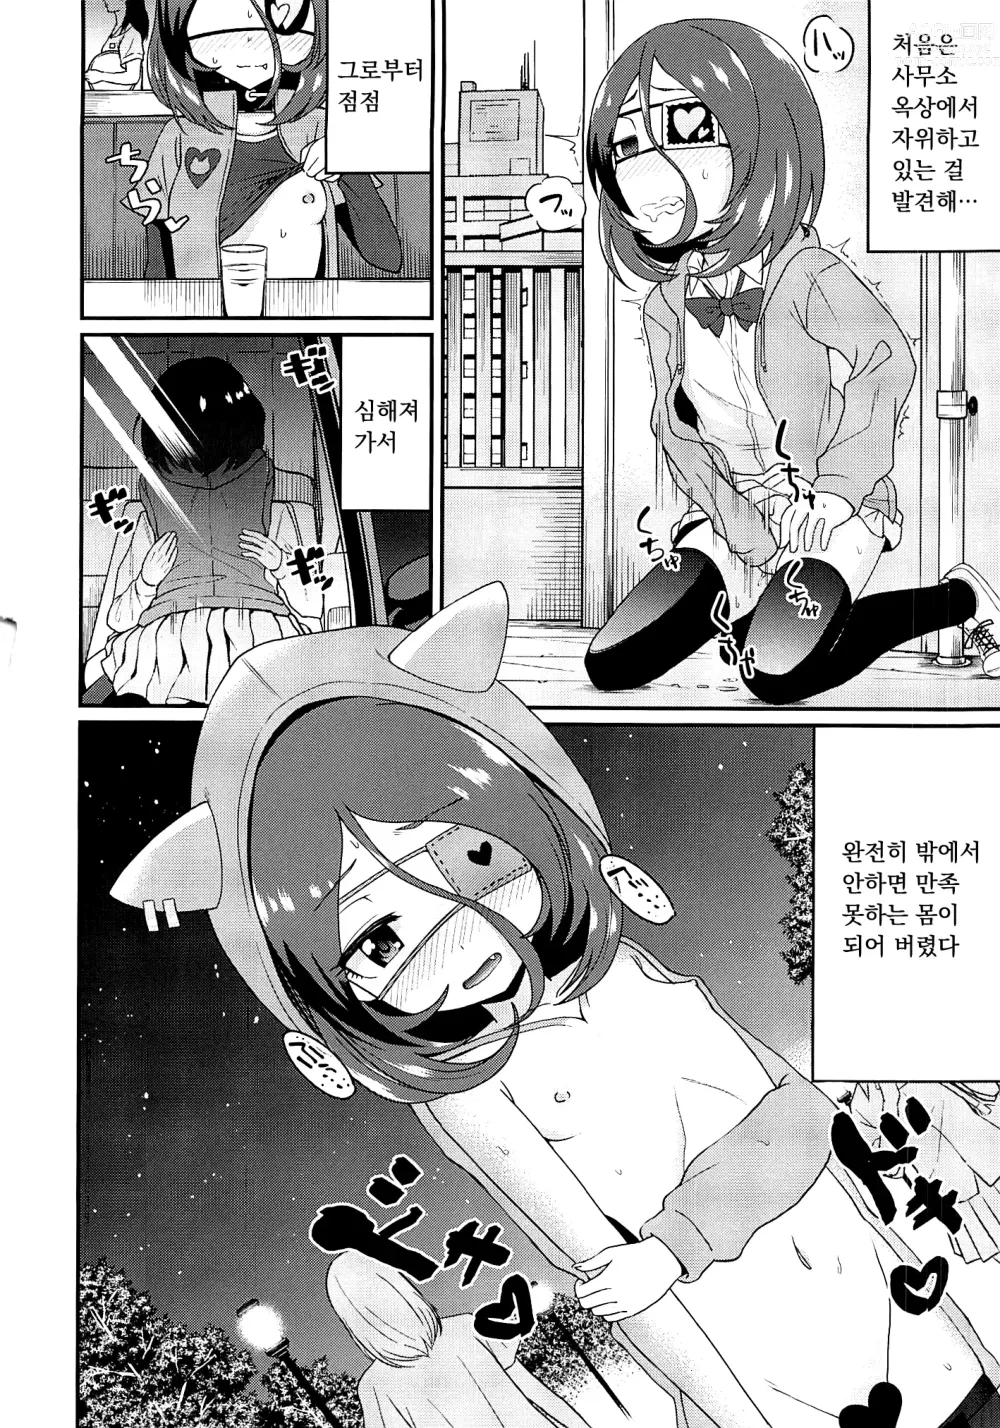 Page 5 of doujinshi 밖에서 미레이♥